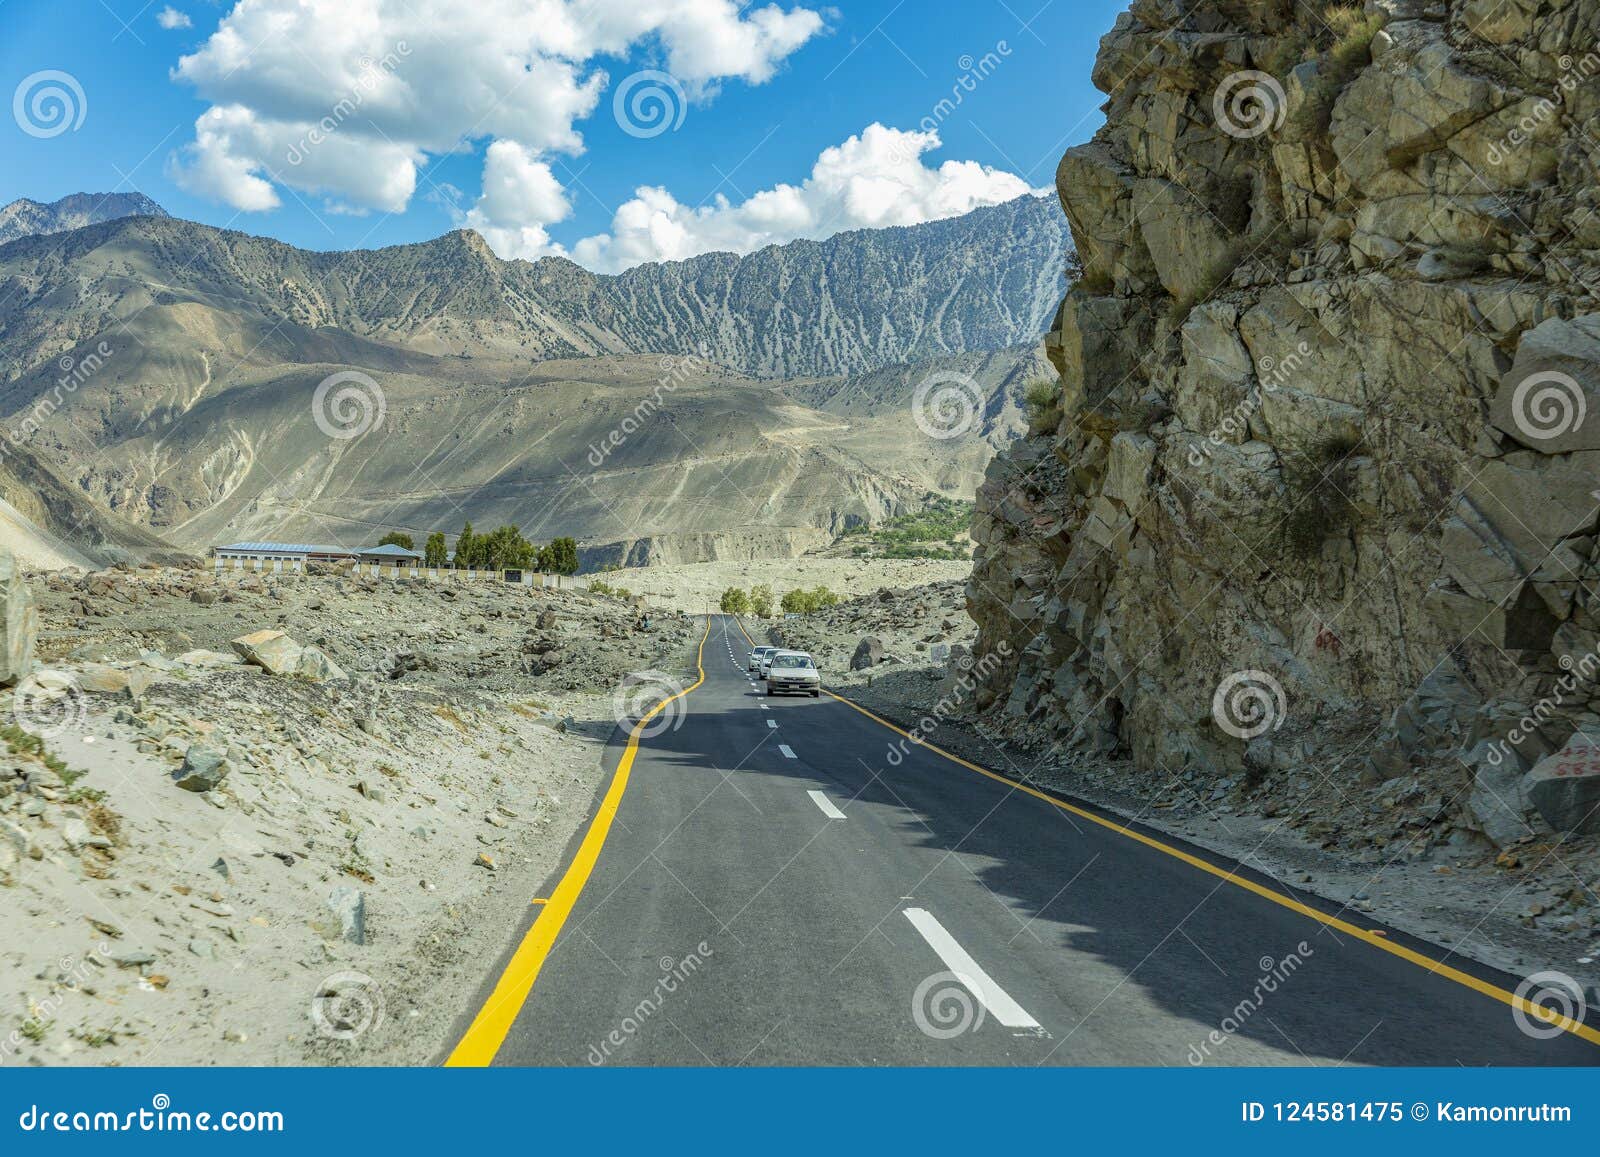 karakoram highway, chillas, diamer, gilgit baltistan, northern pakista